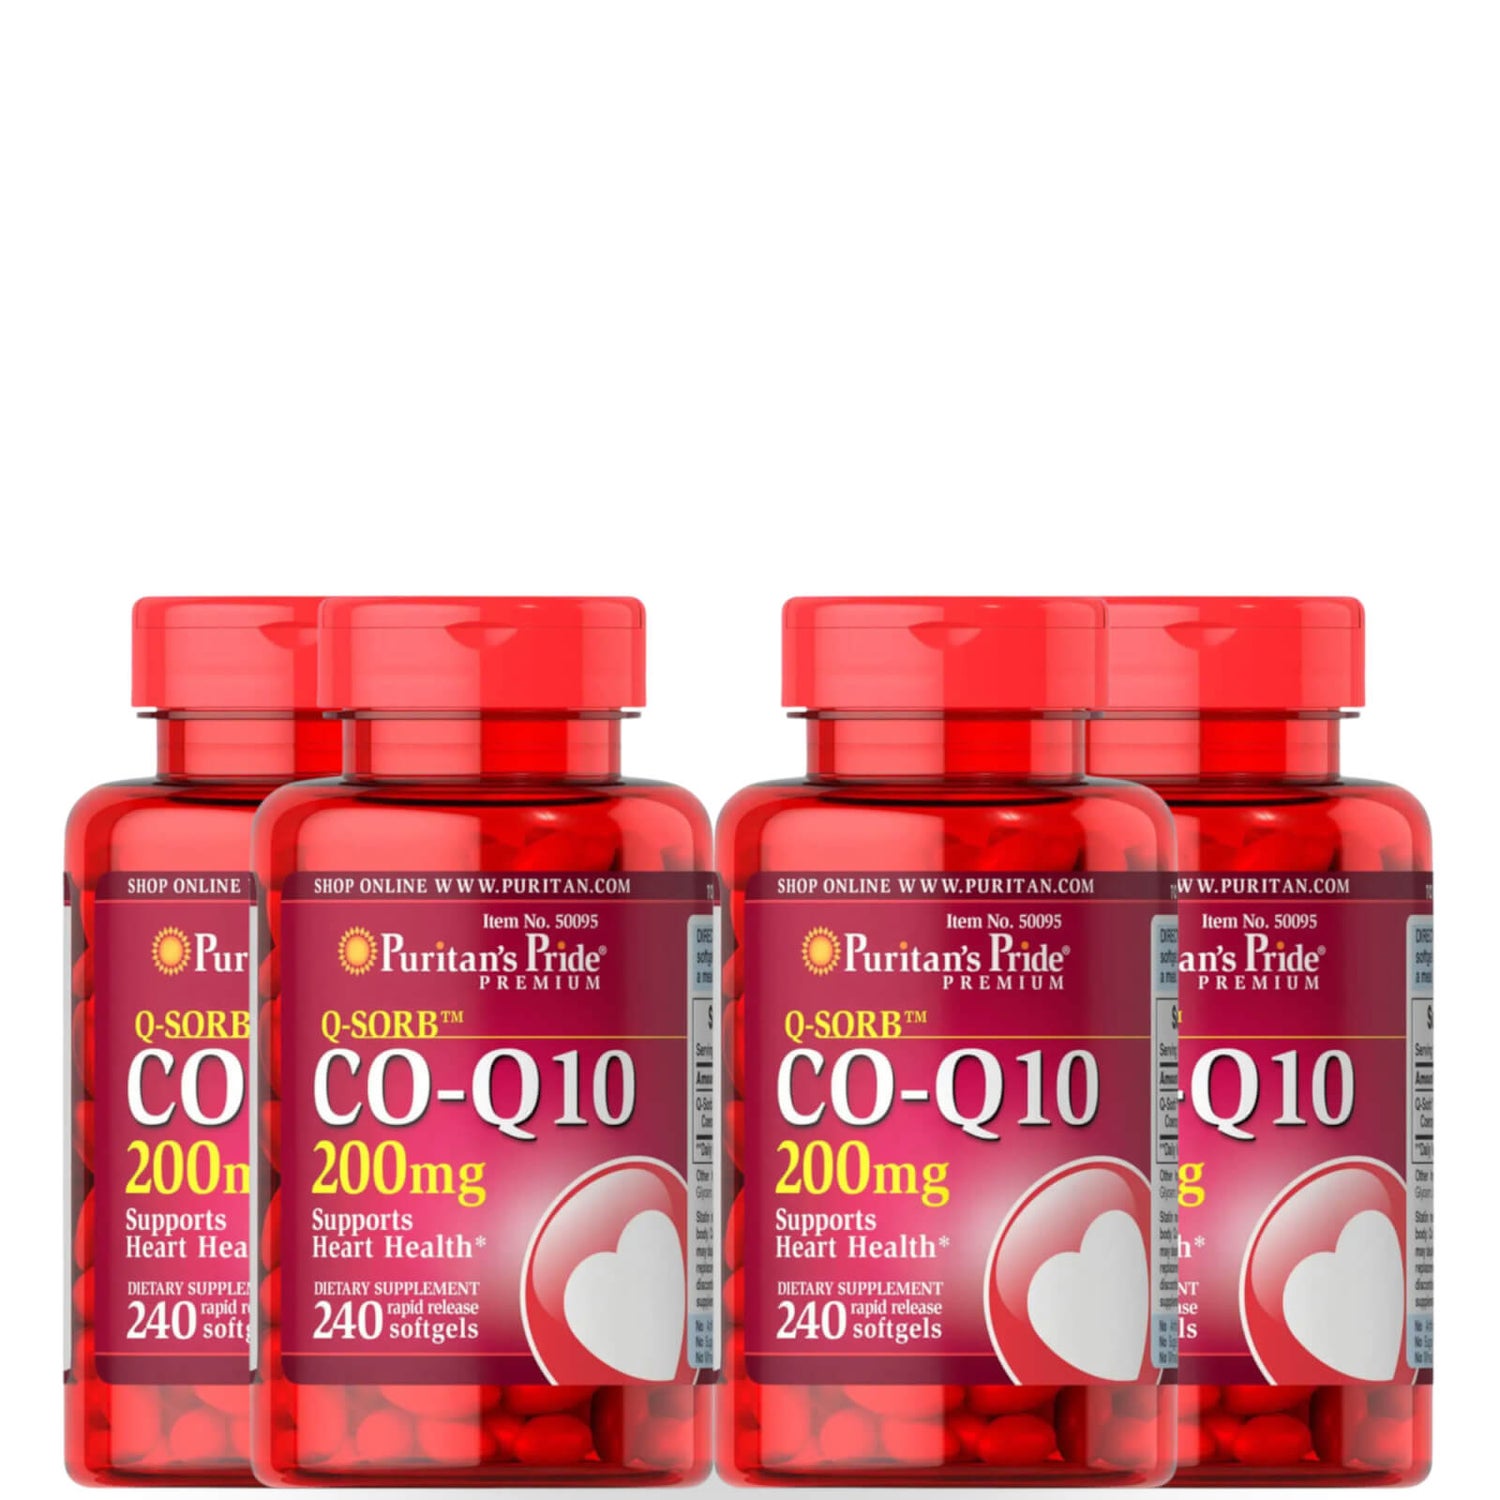 Q-SORB<sup>TM</sup> Co-Enzyme Q-10 200mg - 240 Softgels (4 Pack)